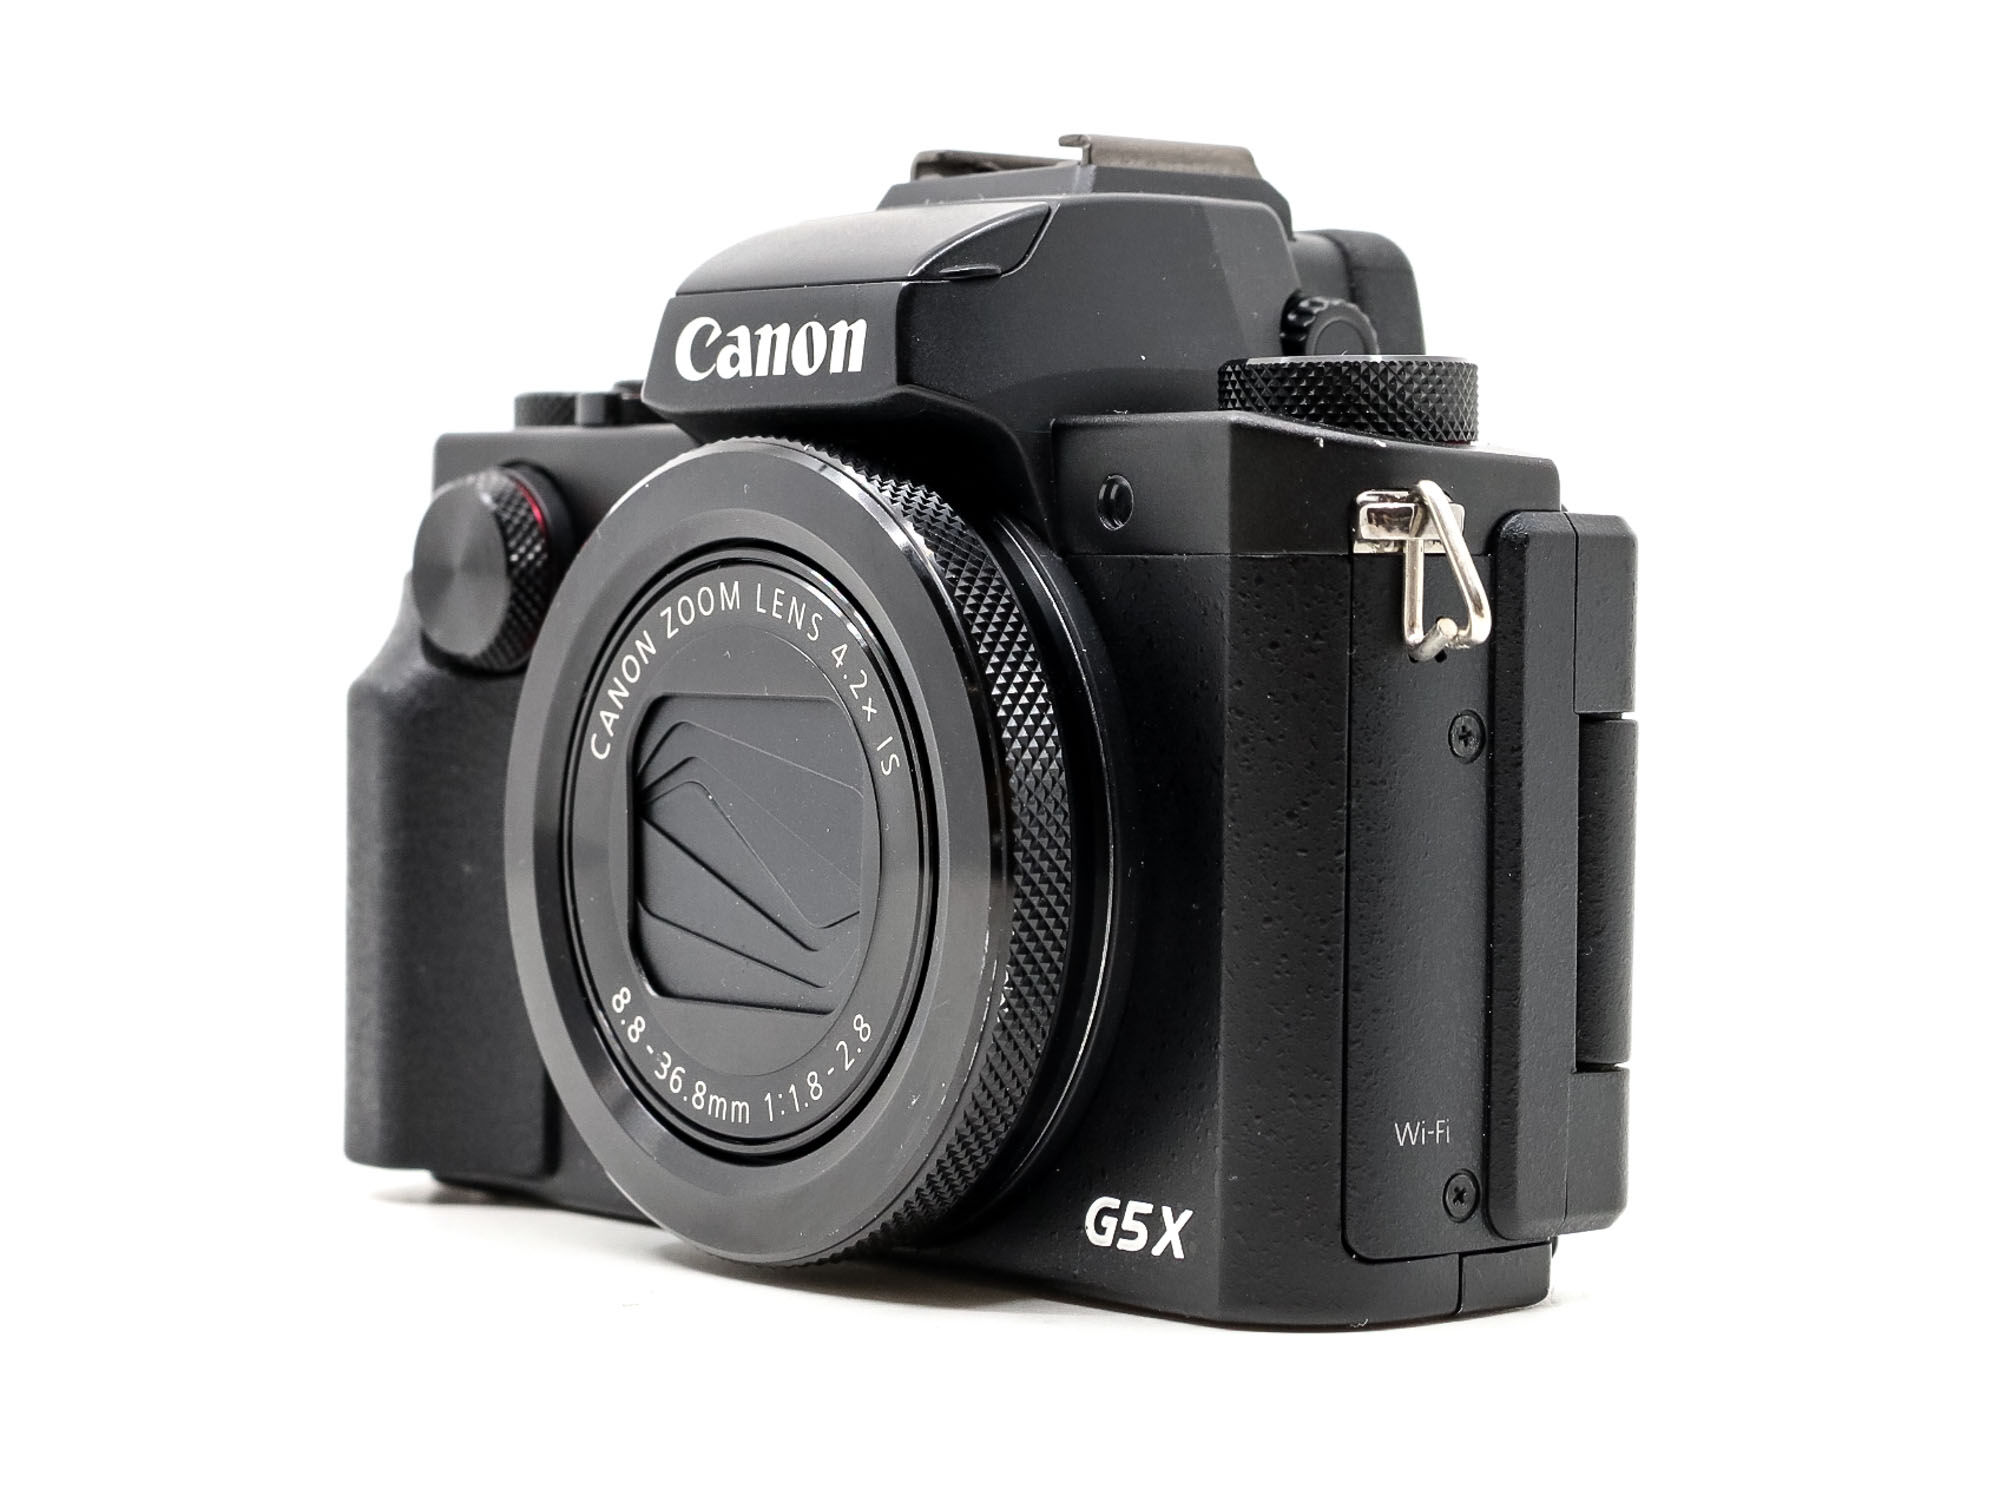 Canon PowerShot G5 X (Condition: Good)